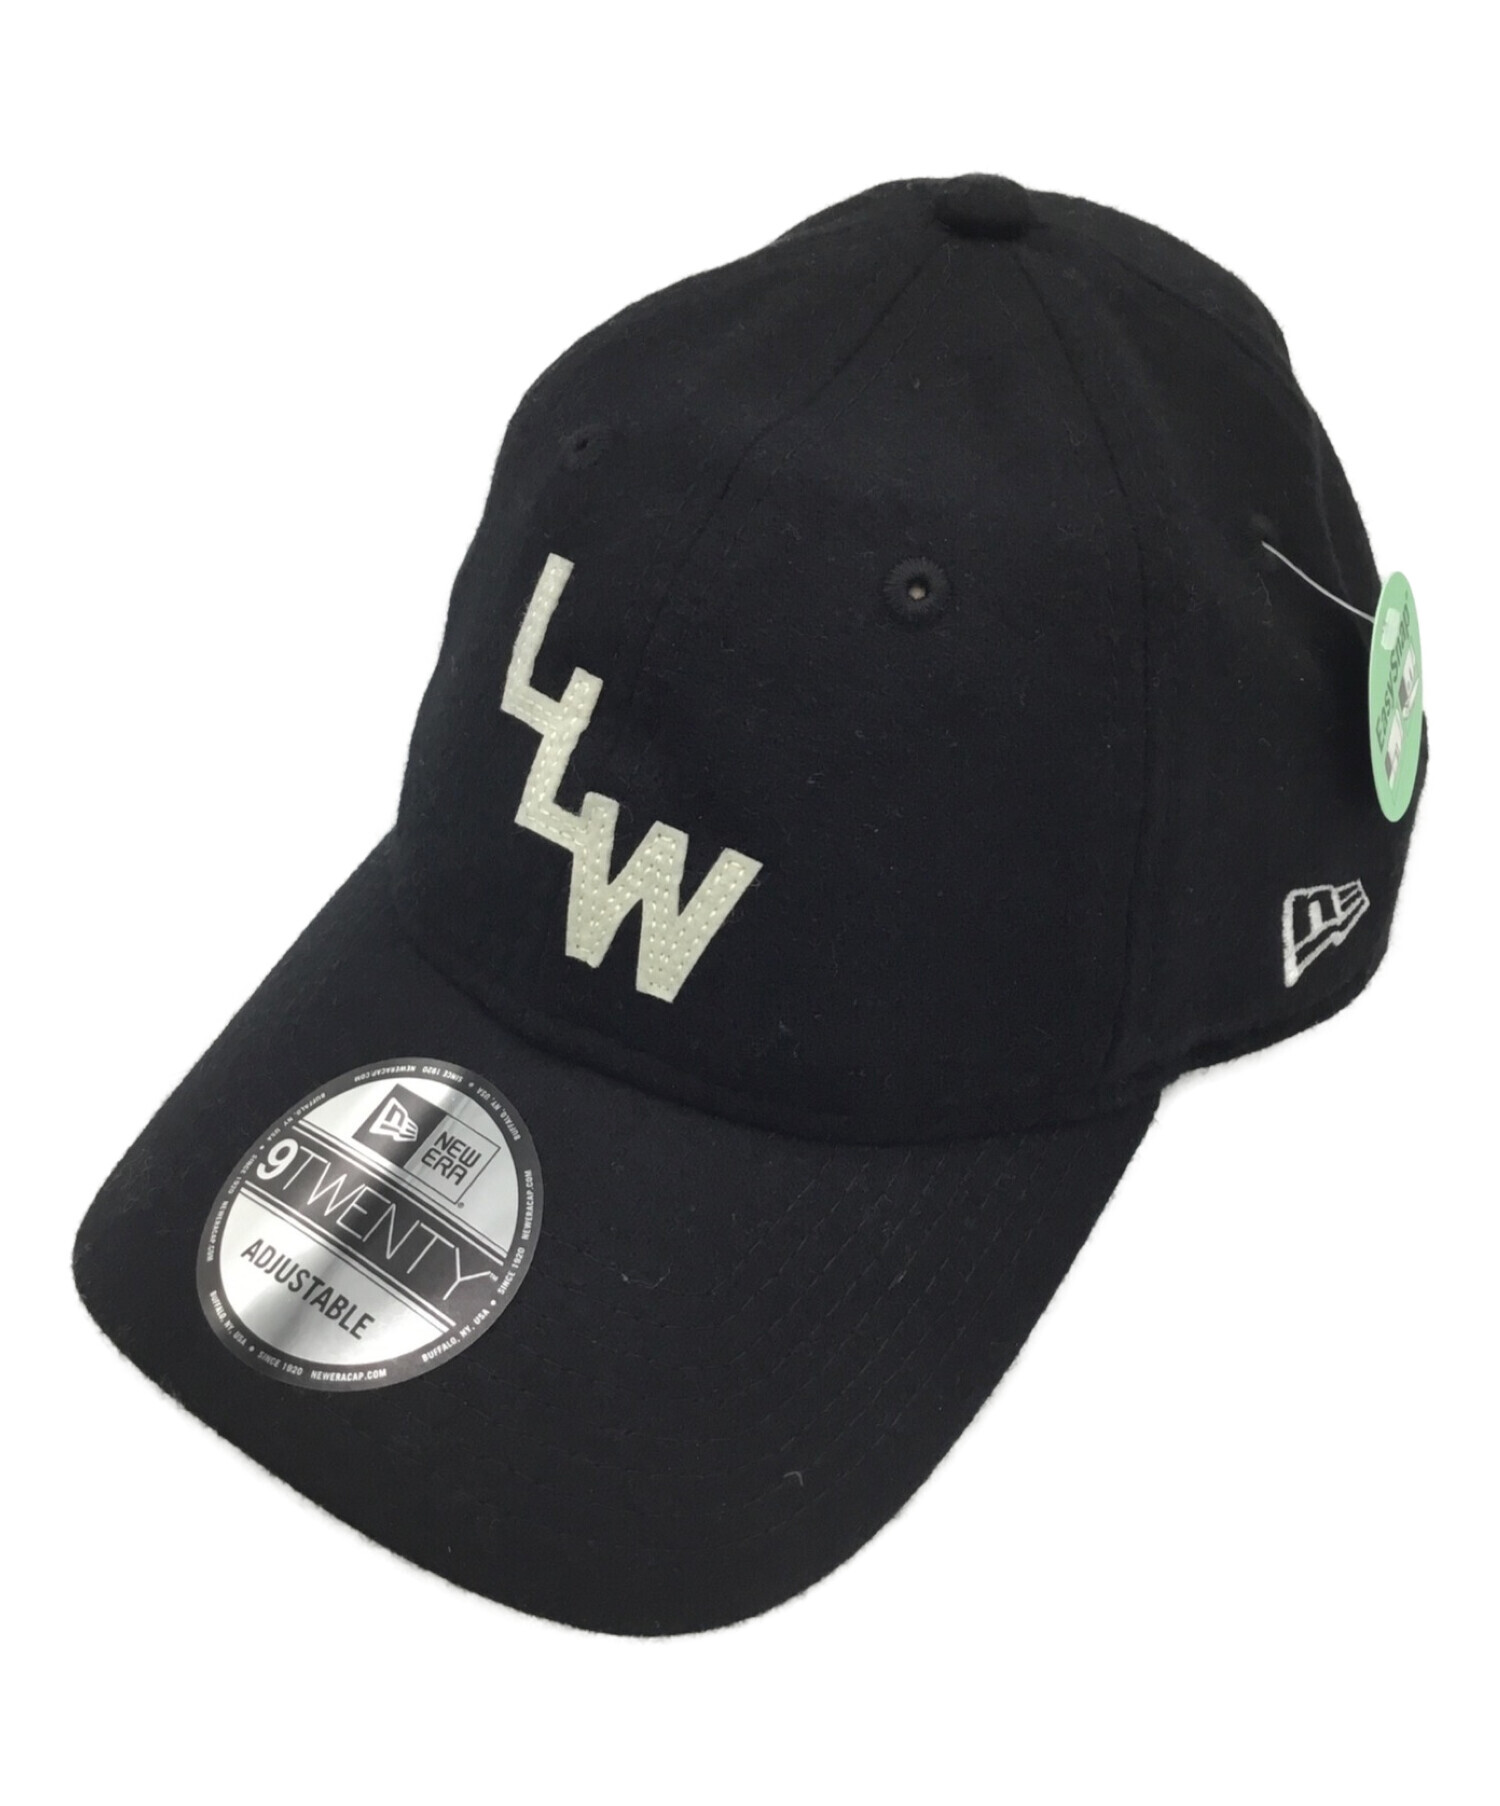 WTAPS / NEWERA 9TWENTY CAP 新品未使用帽子